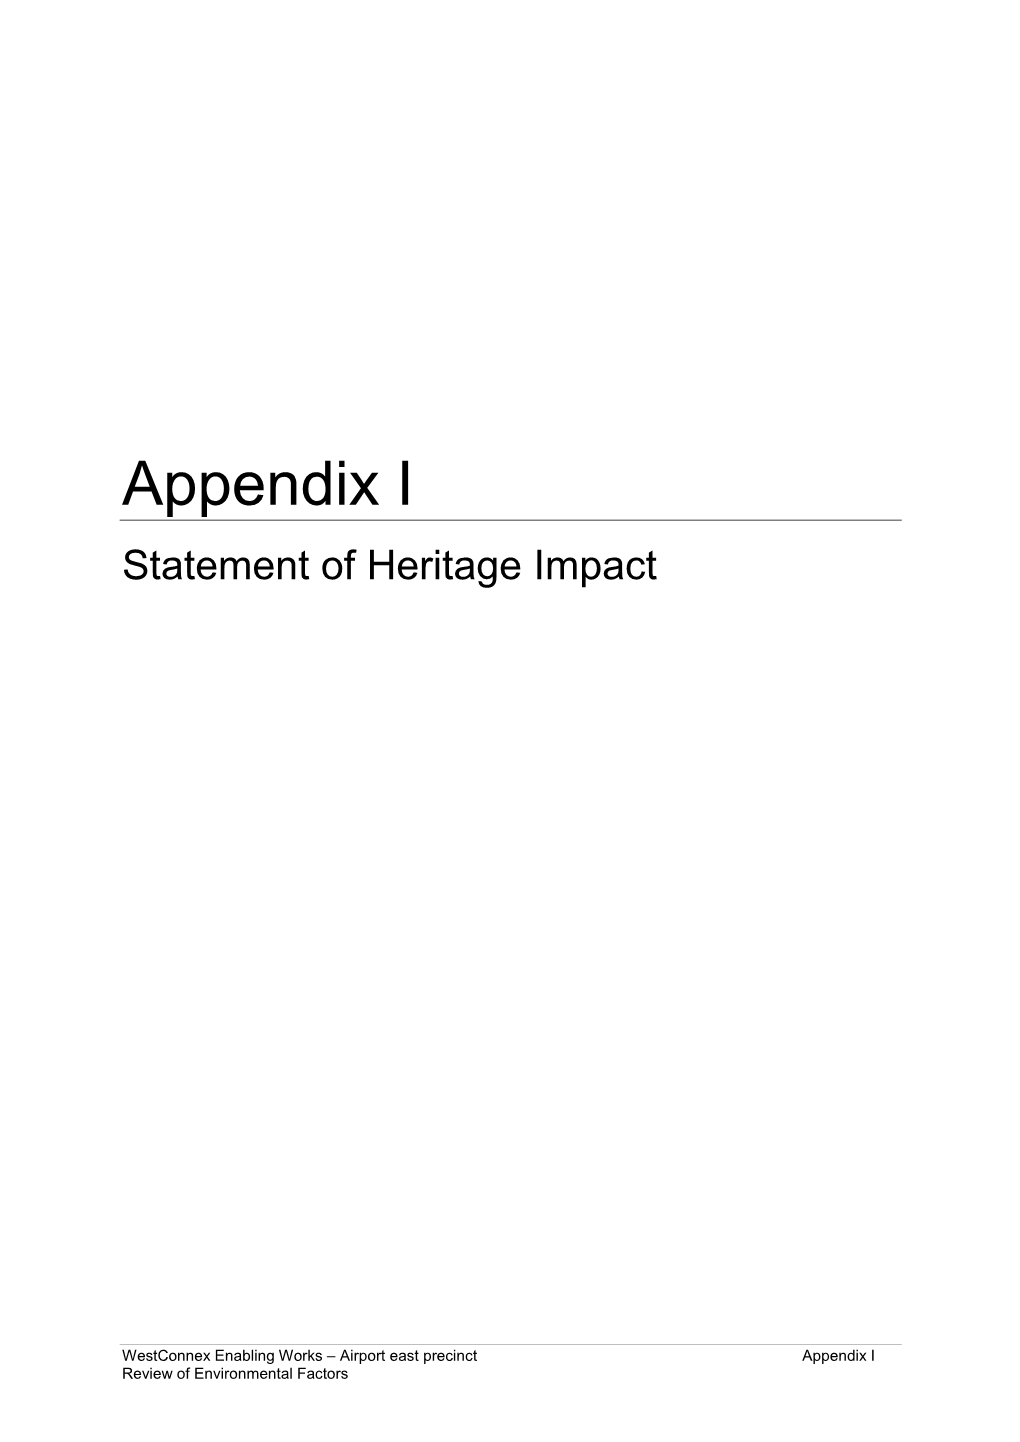 Appendix I Statement of Heritage Impact